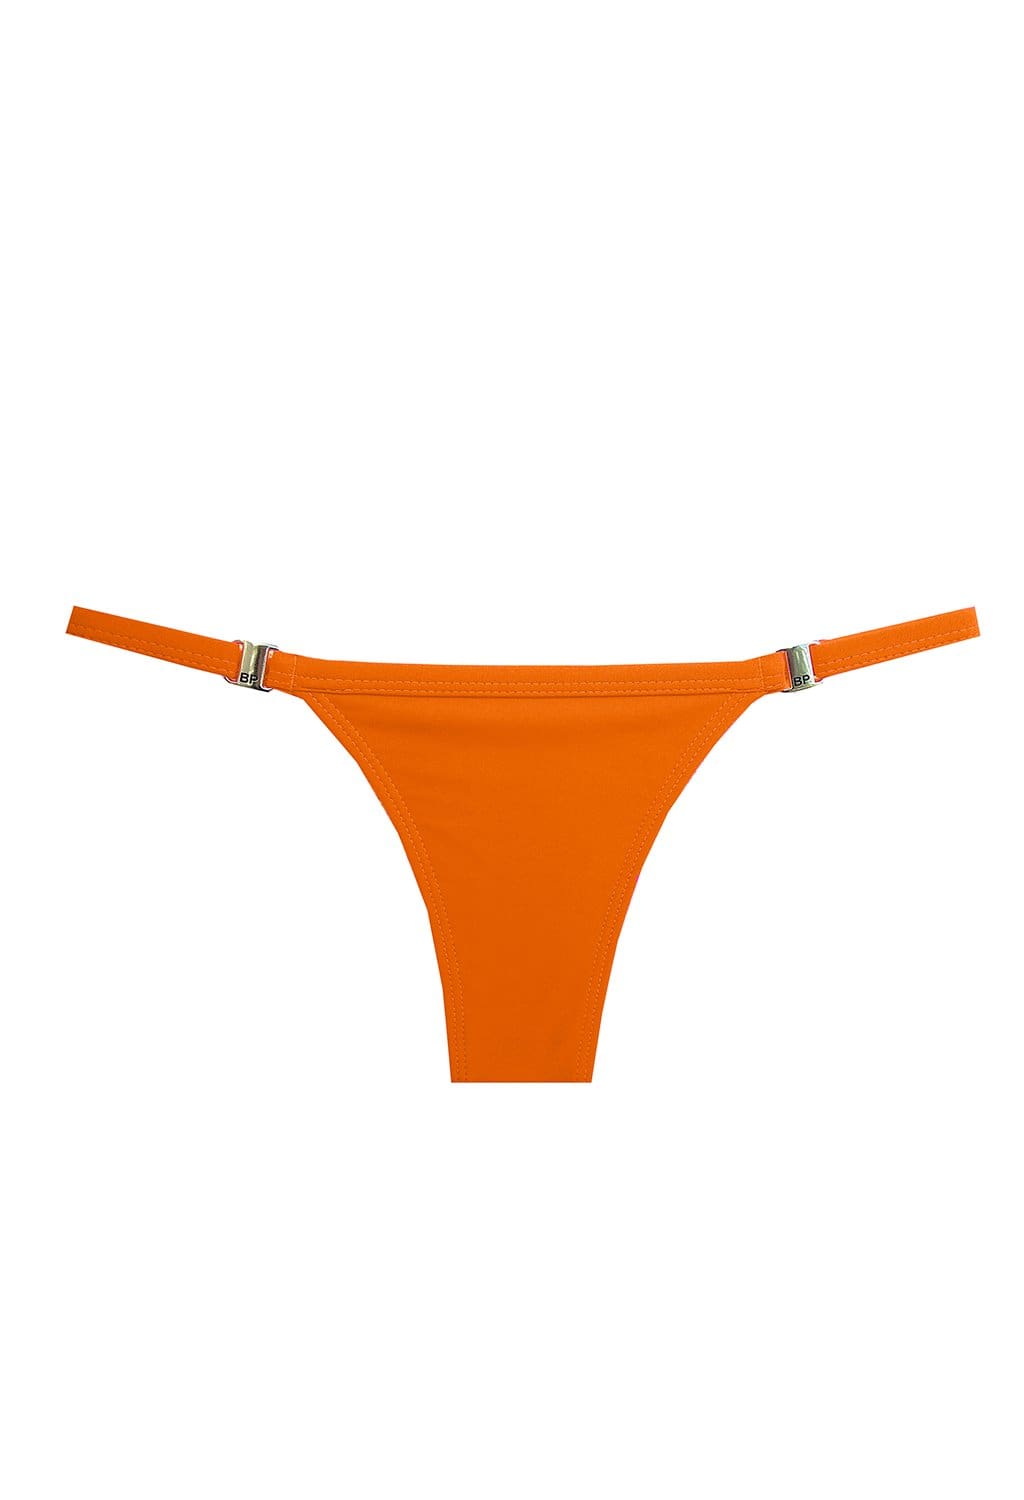 Neon Orange Bikini Bottoms - Banka Panka - bikiniland